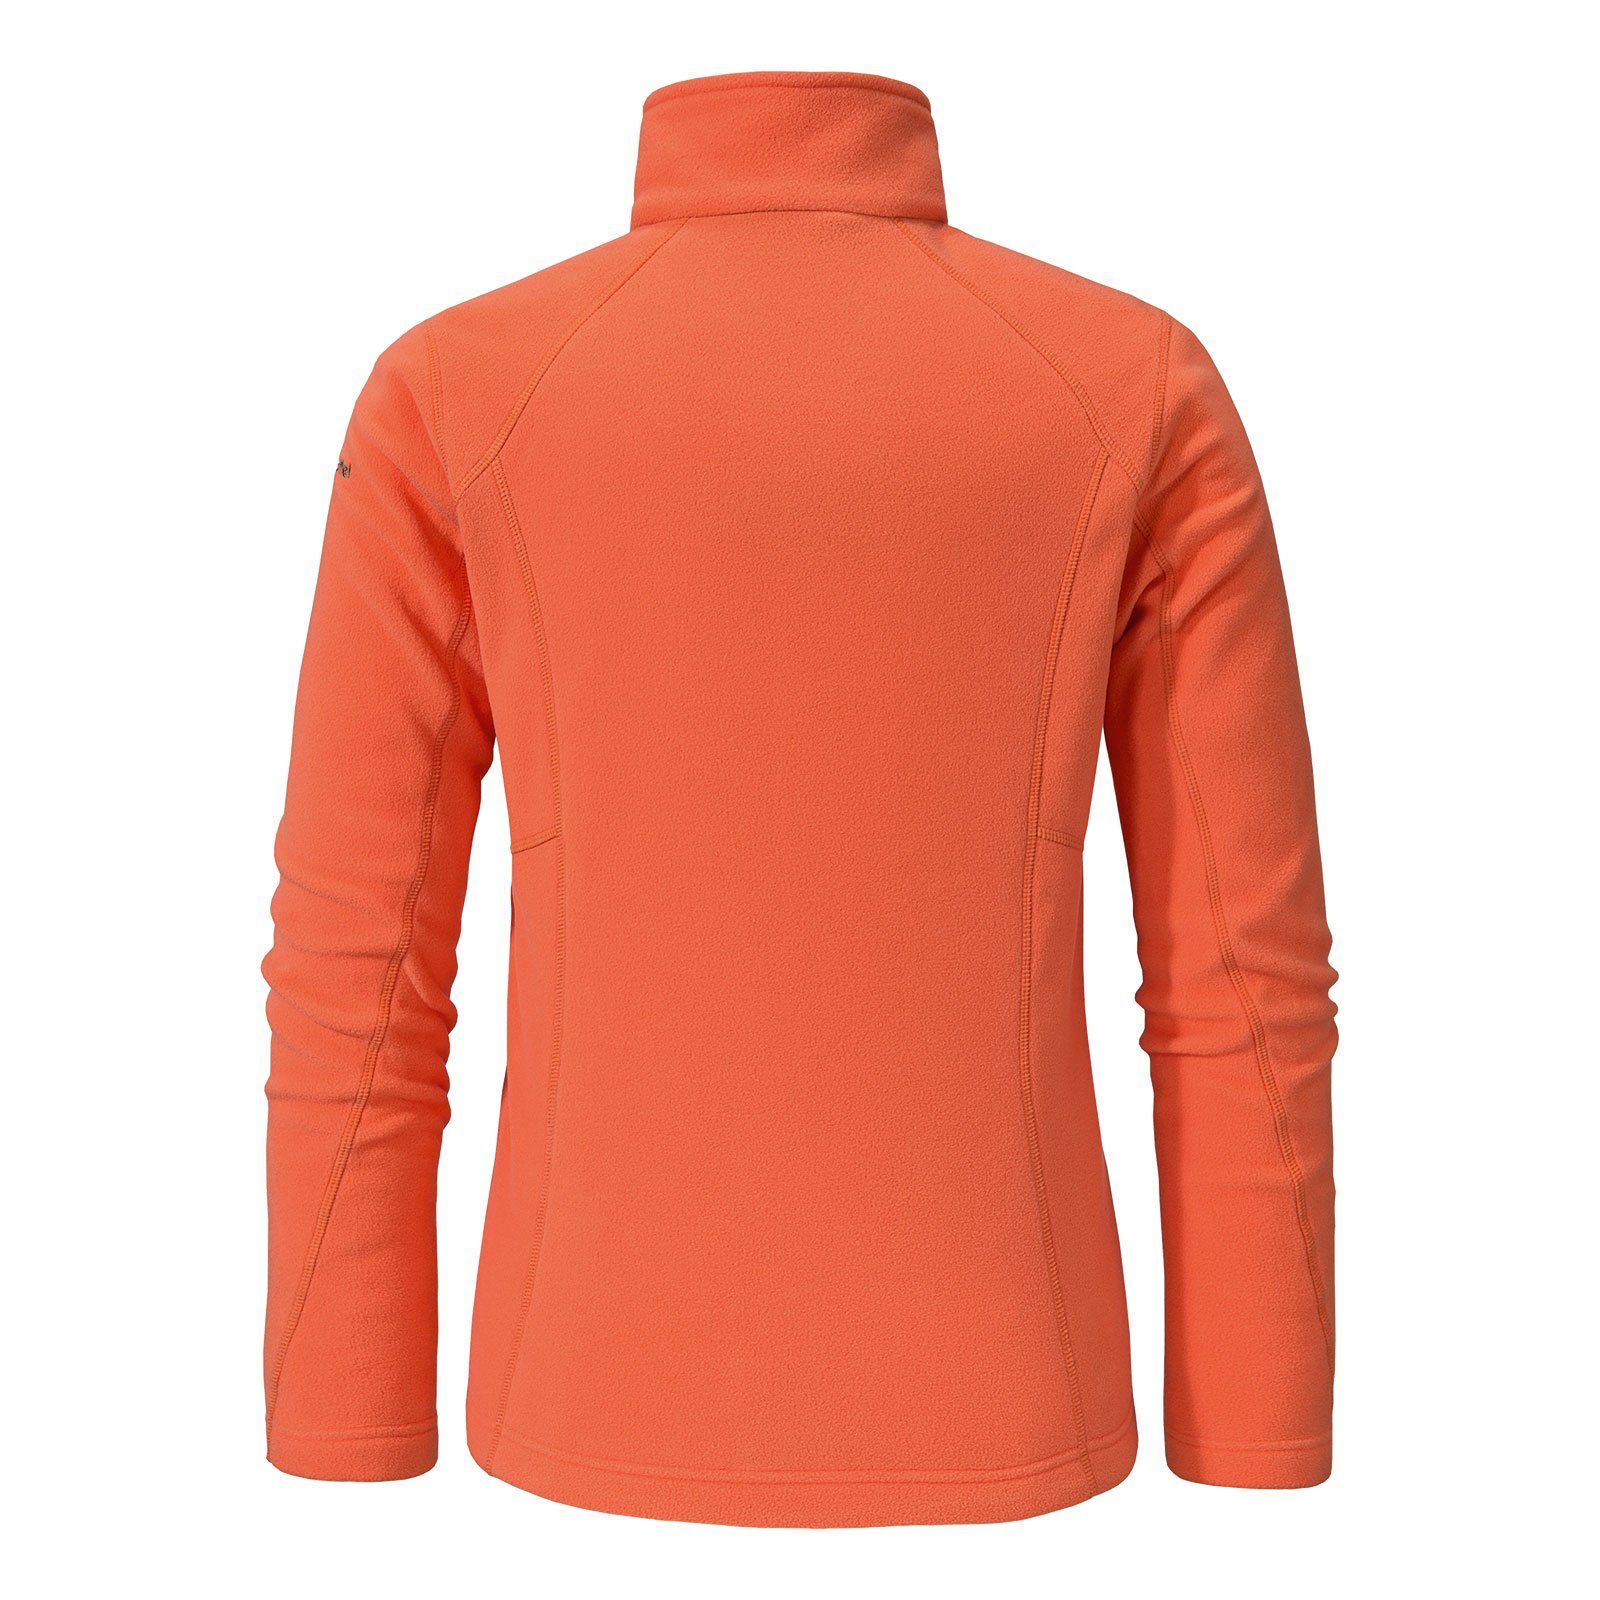 Leona3 Jacket Schöffel schnelltrocknend orange Fleece 5310 Fleecejacke